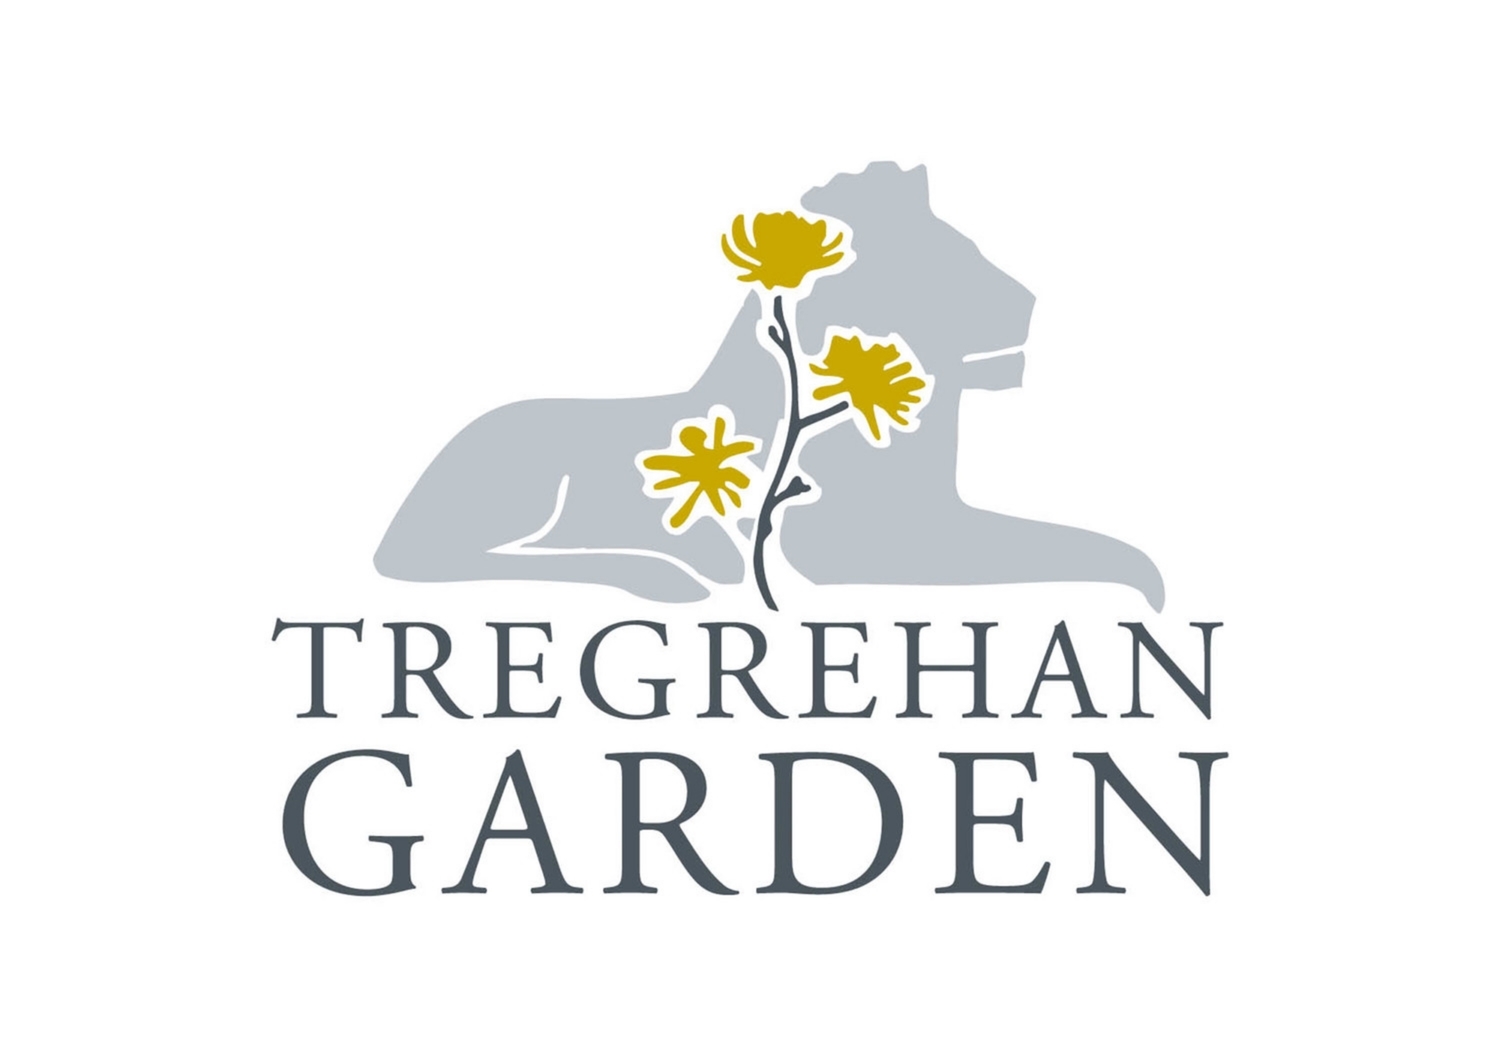 Tregrehan Garden Cornwall